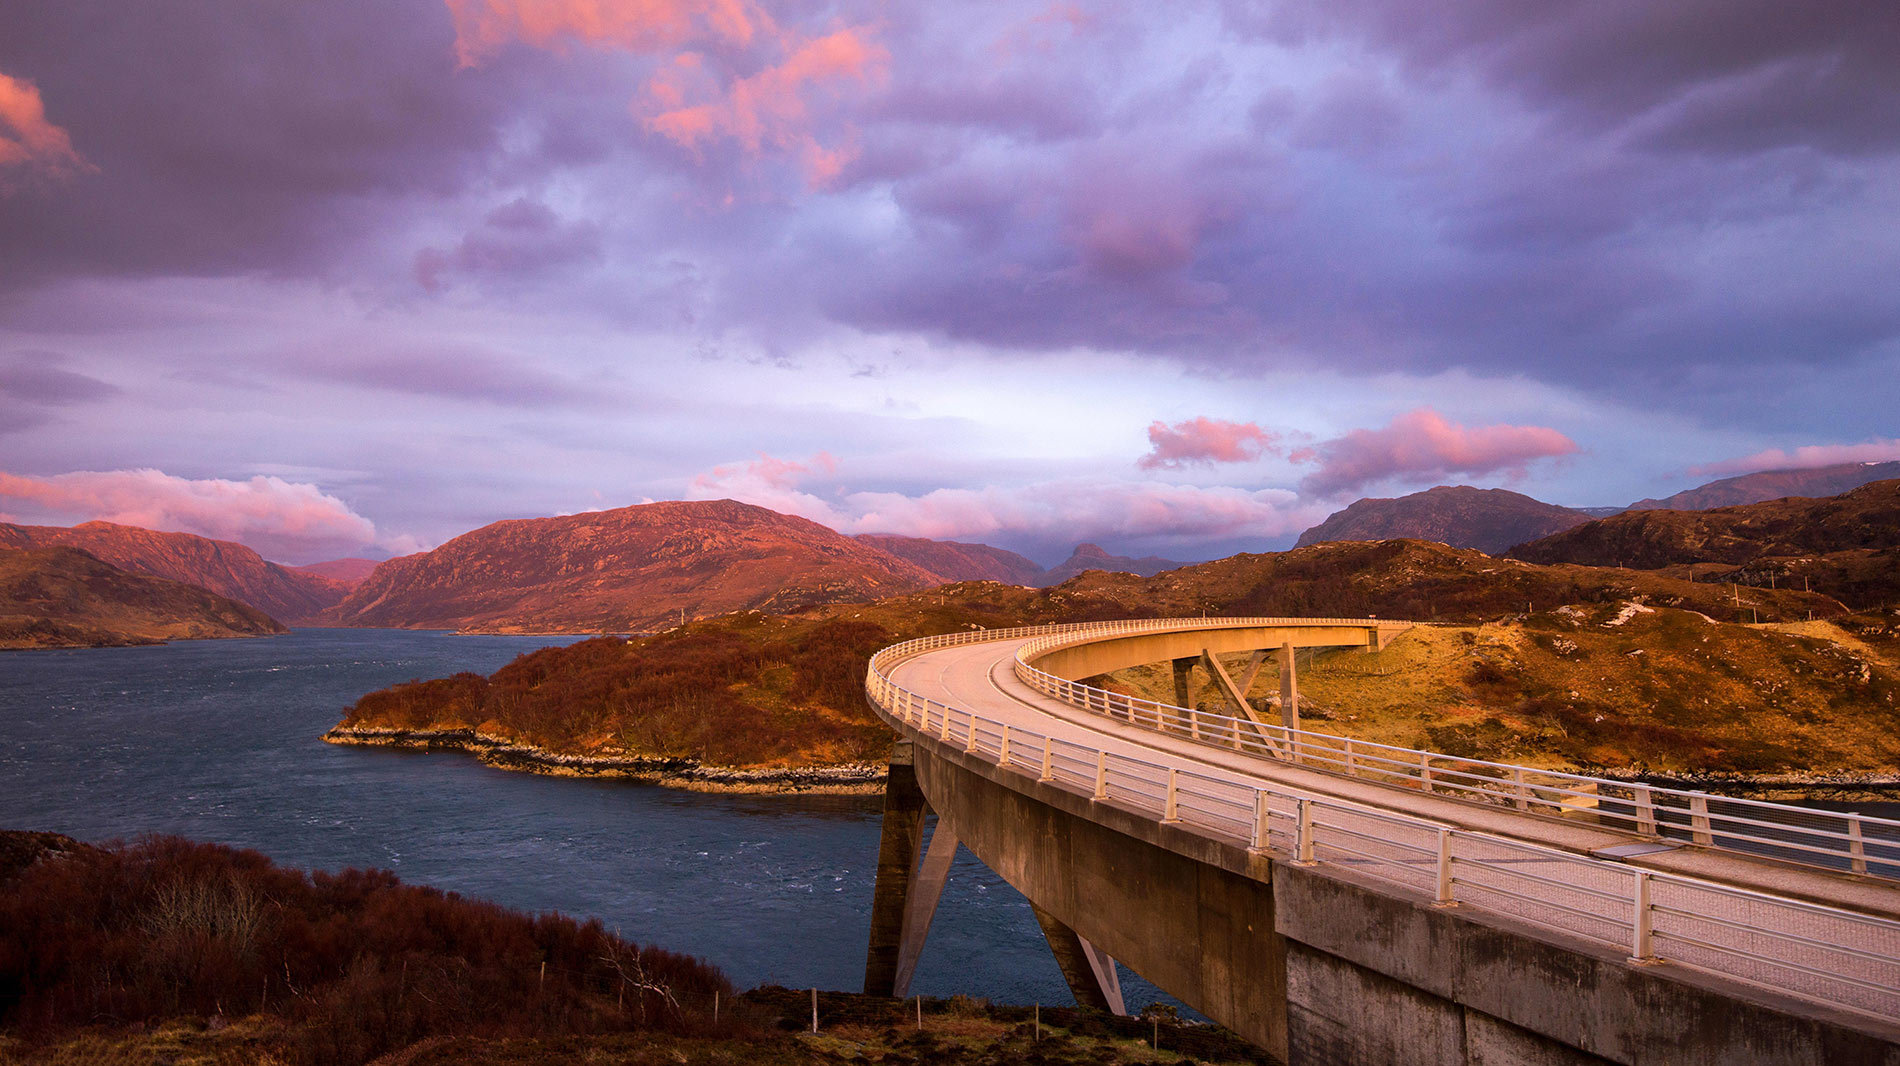 The Kylesku Bridge crosses Loch a' Chairn in Sutherland, Scotland.